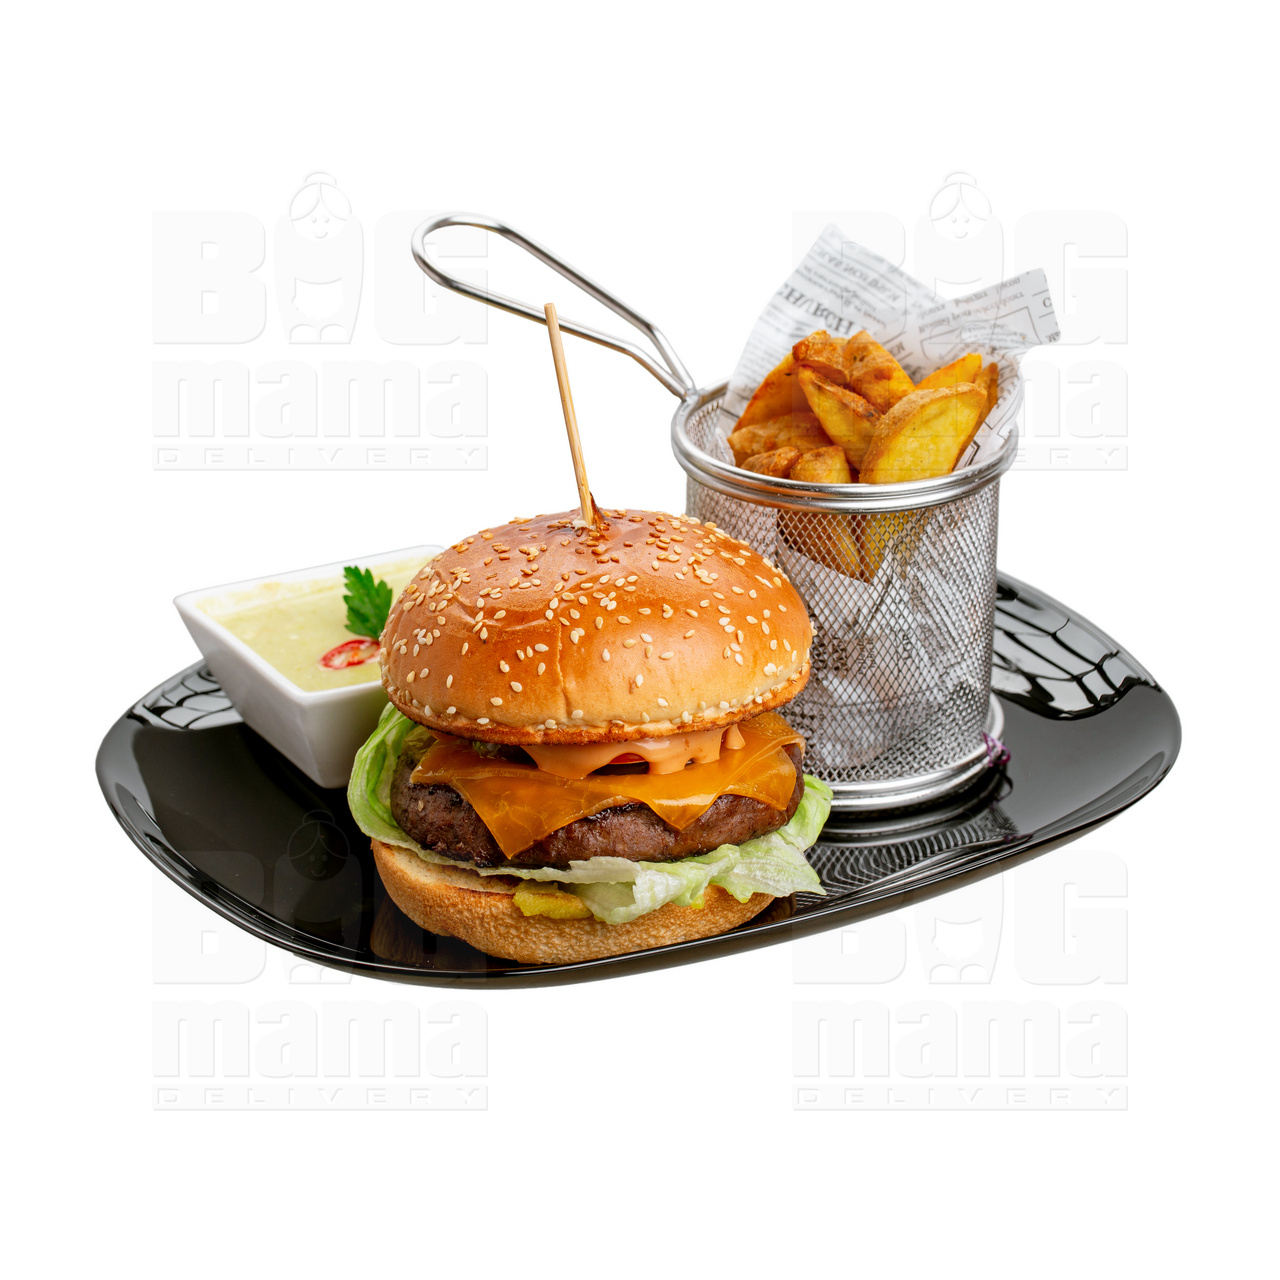 Product #255 image - Jalapeno hamburger menü